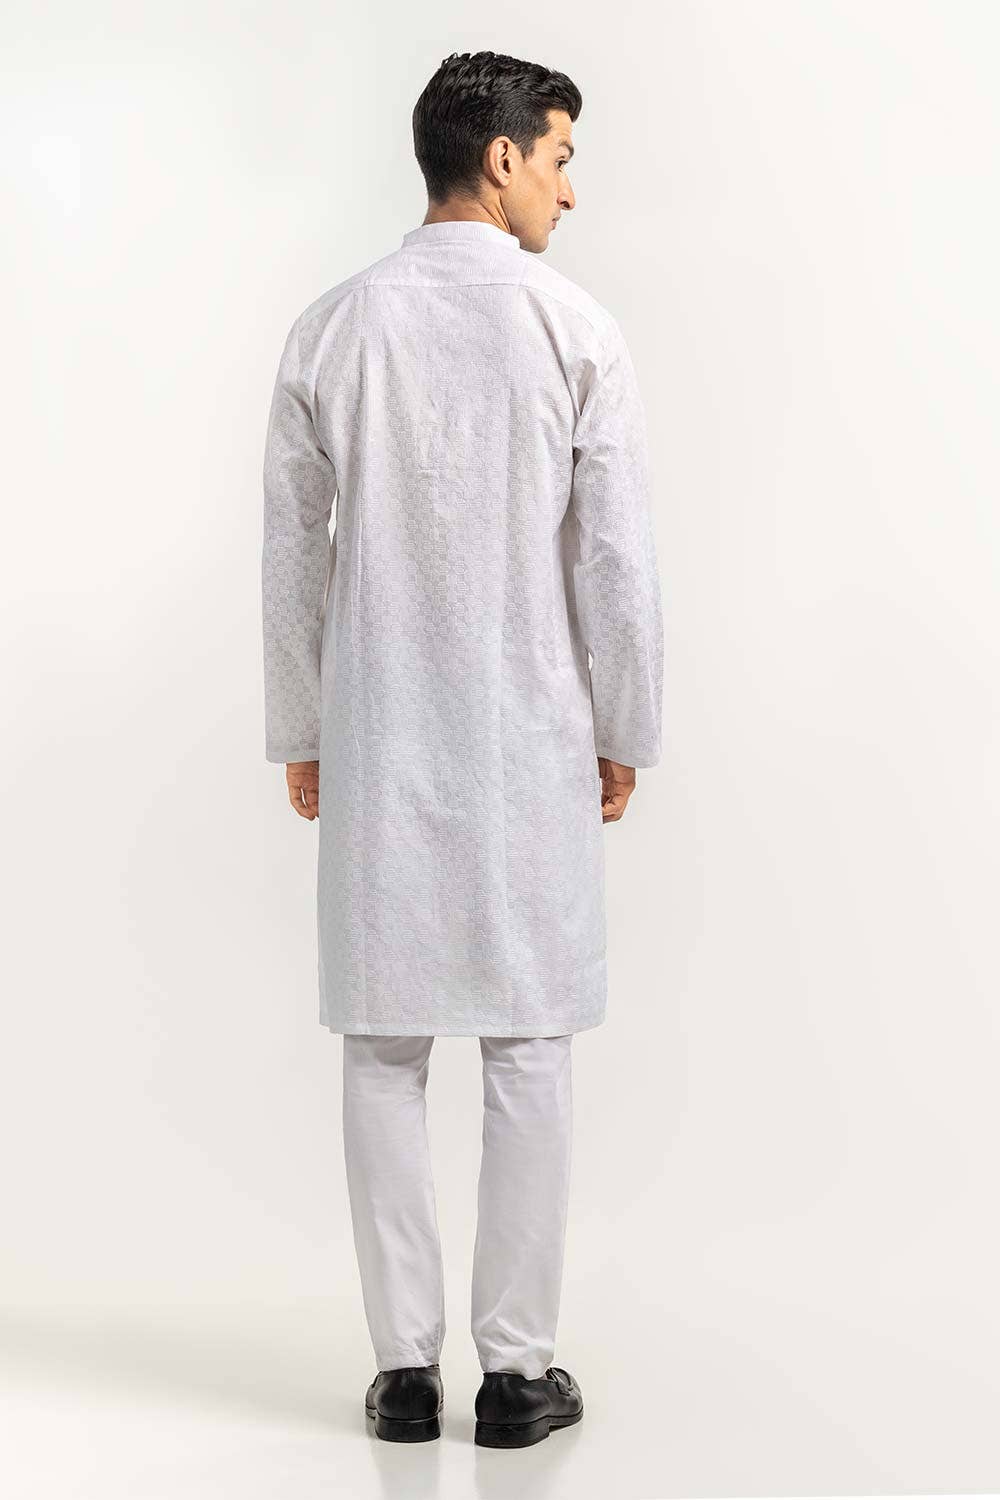 Gul Ahmed Ready to Wear White Basic Kurta KR-PLN22-053